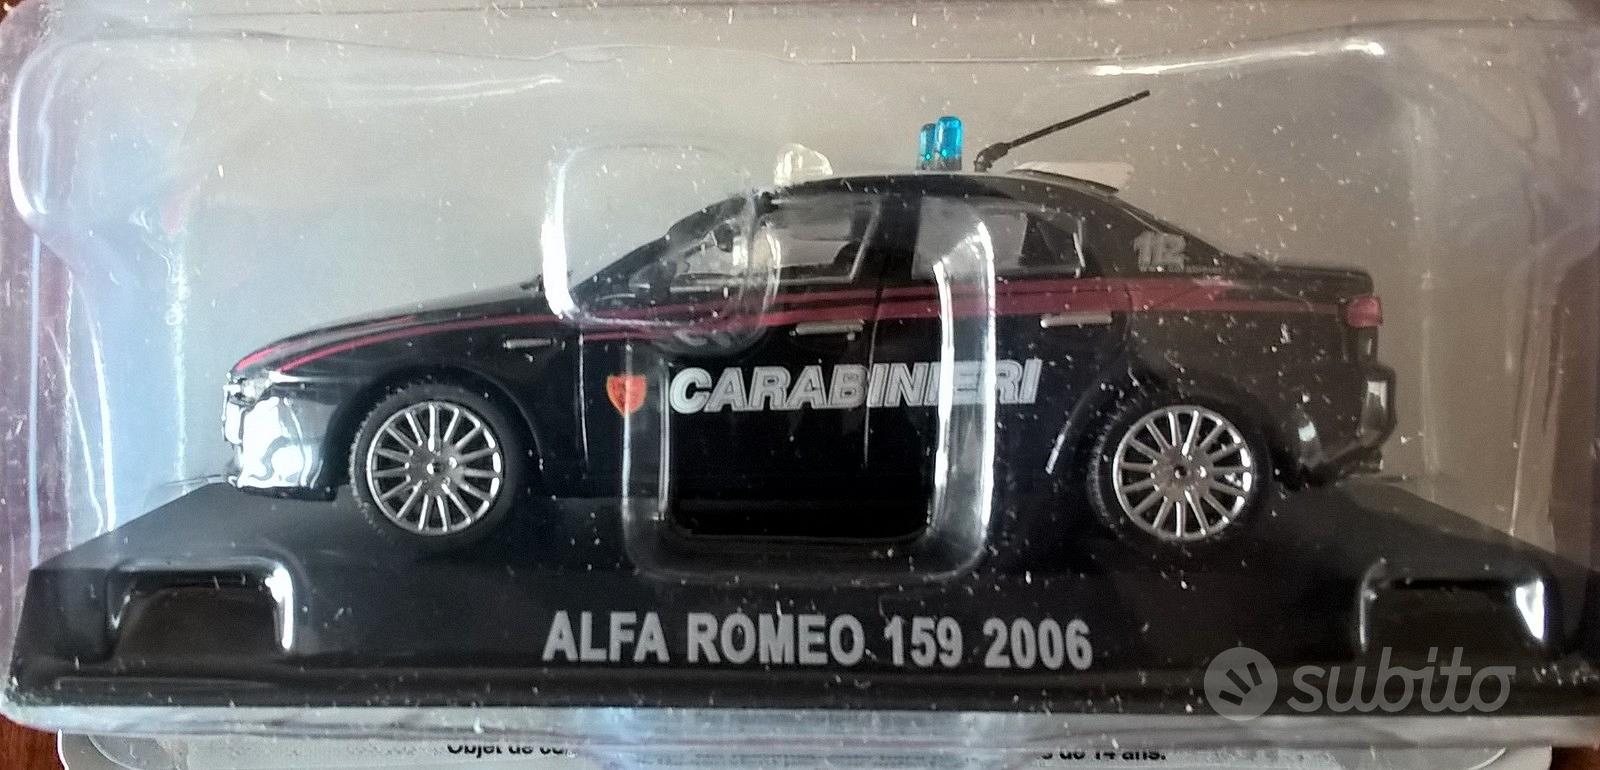 Die cast 1/43 Modellino Auto Carabinieri Alfa Romeo 159